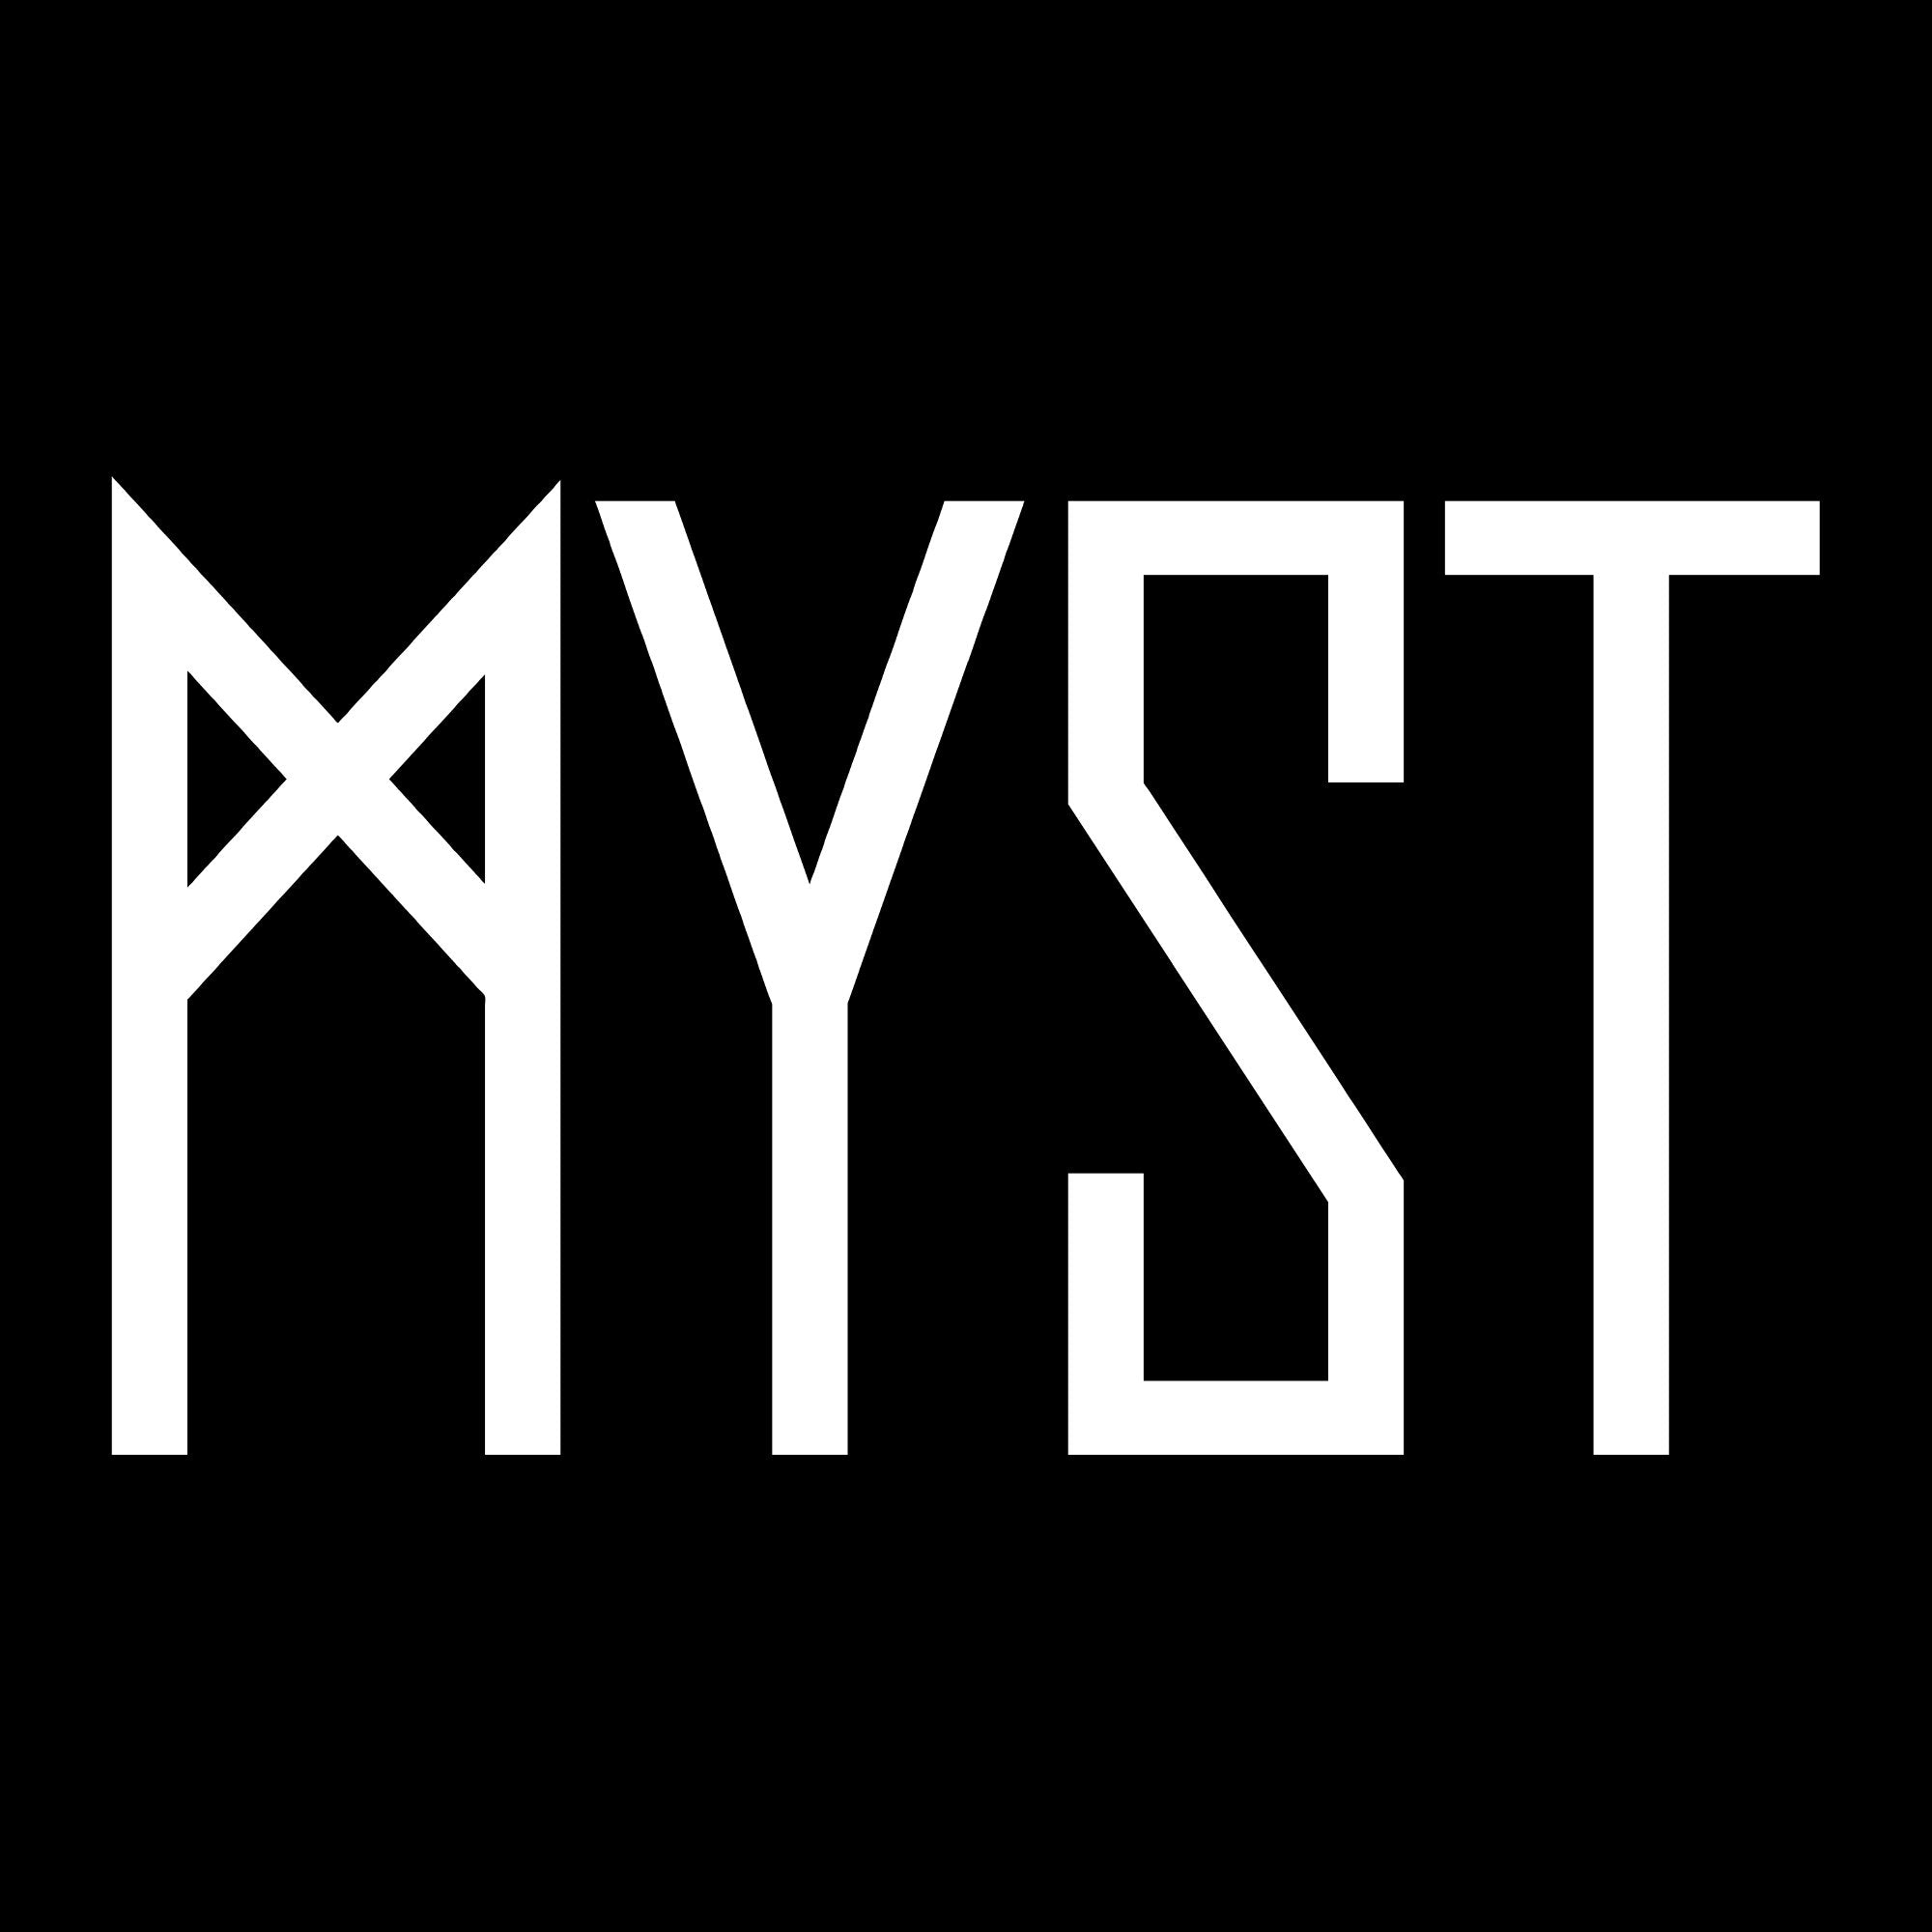 MYST